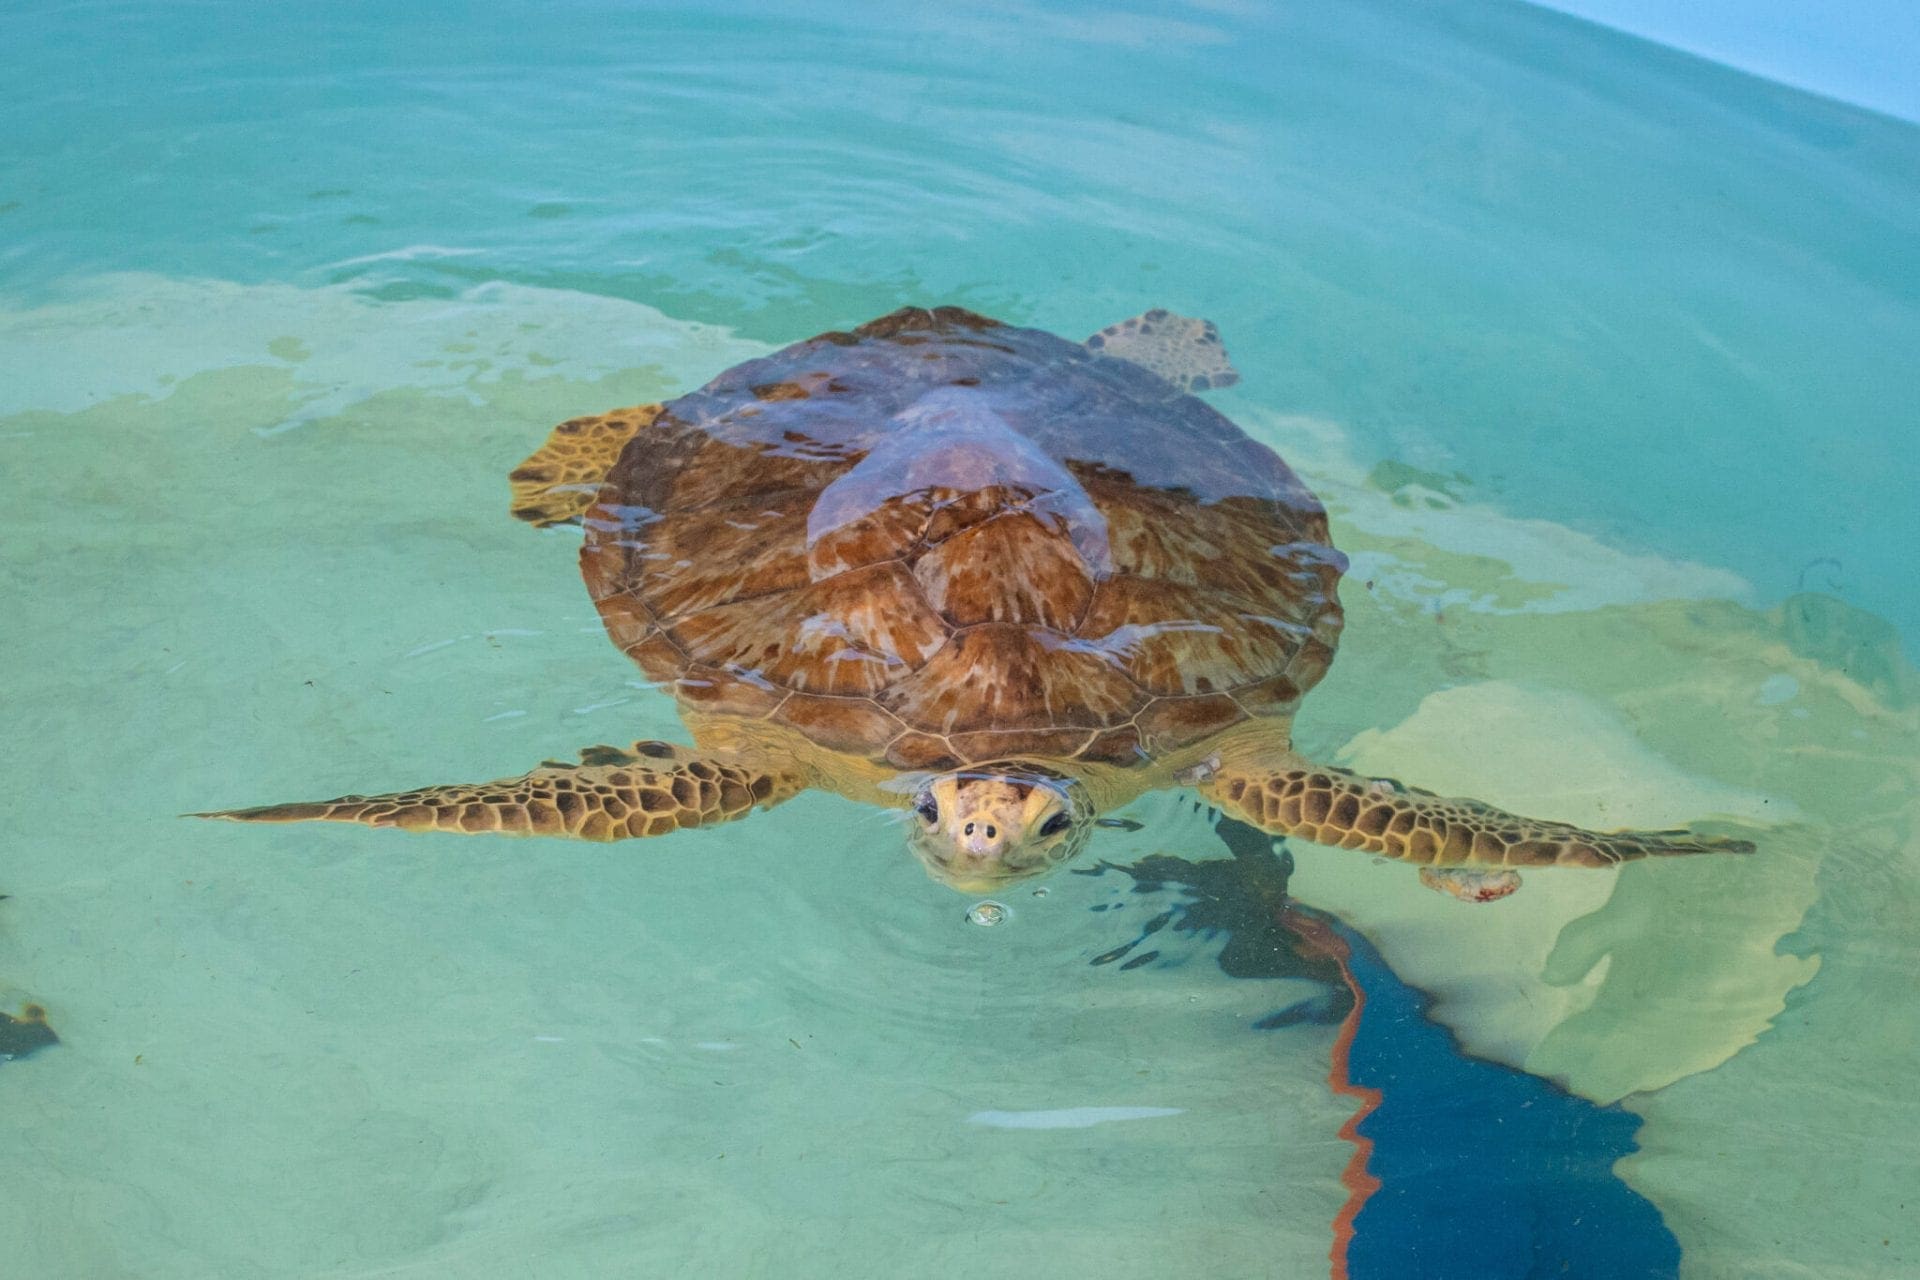 A green sea turtle swims toward the camera